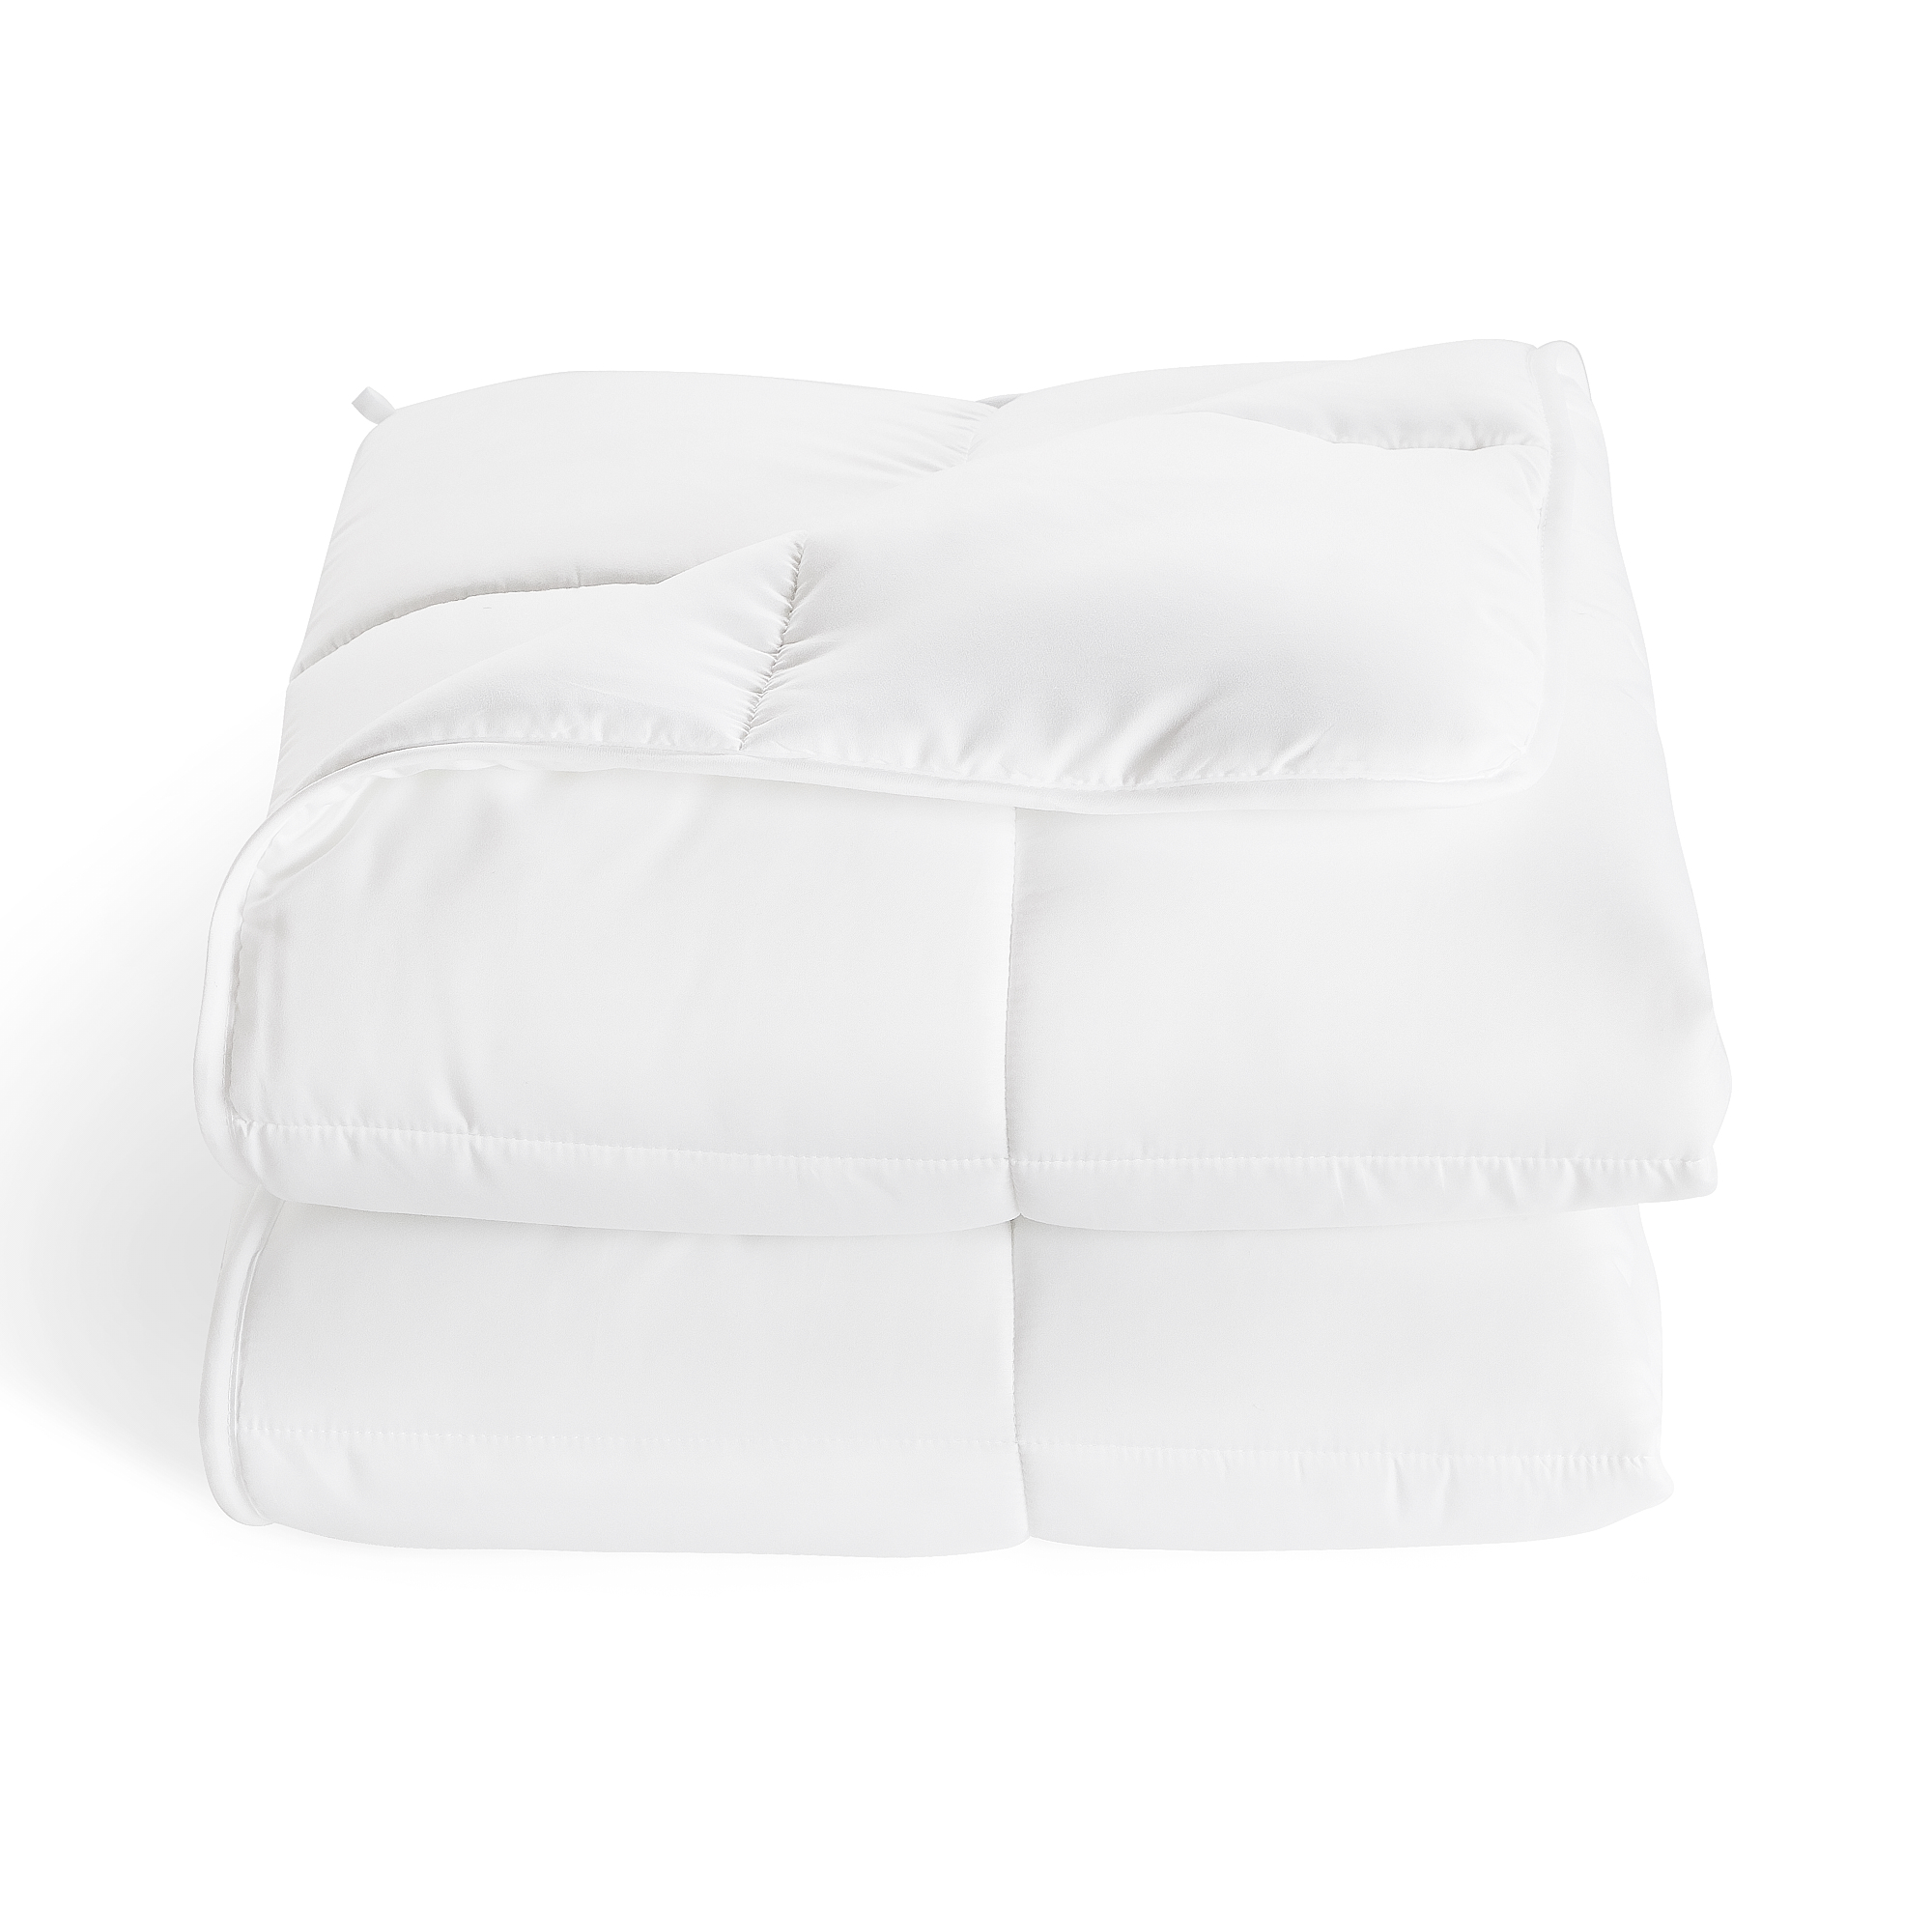 Rest Haven All-Season Down Alternative Comforter, Queen, White - image 13 of 15